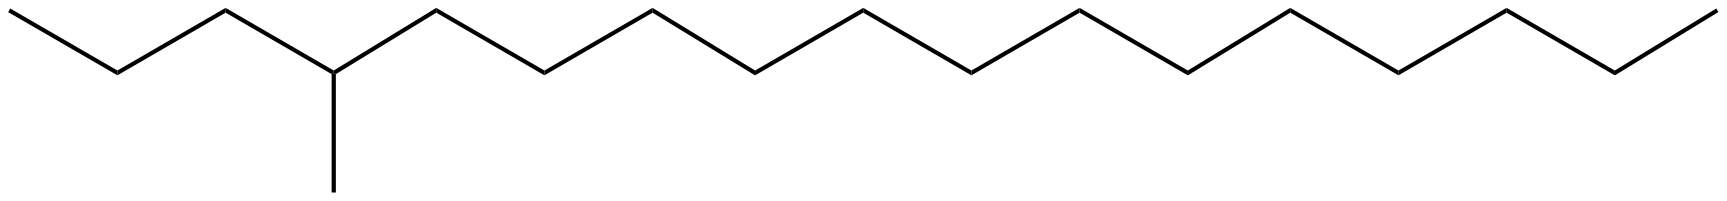 Image of heptadecane, 4-methyl-